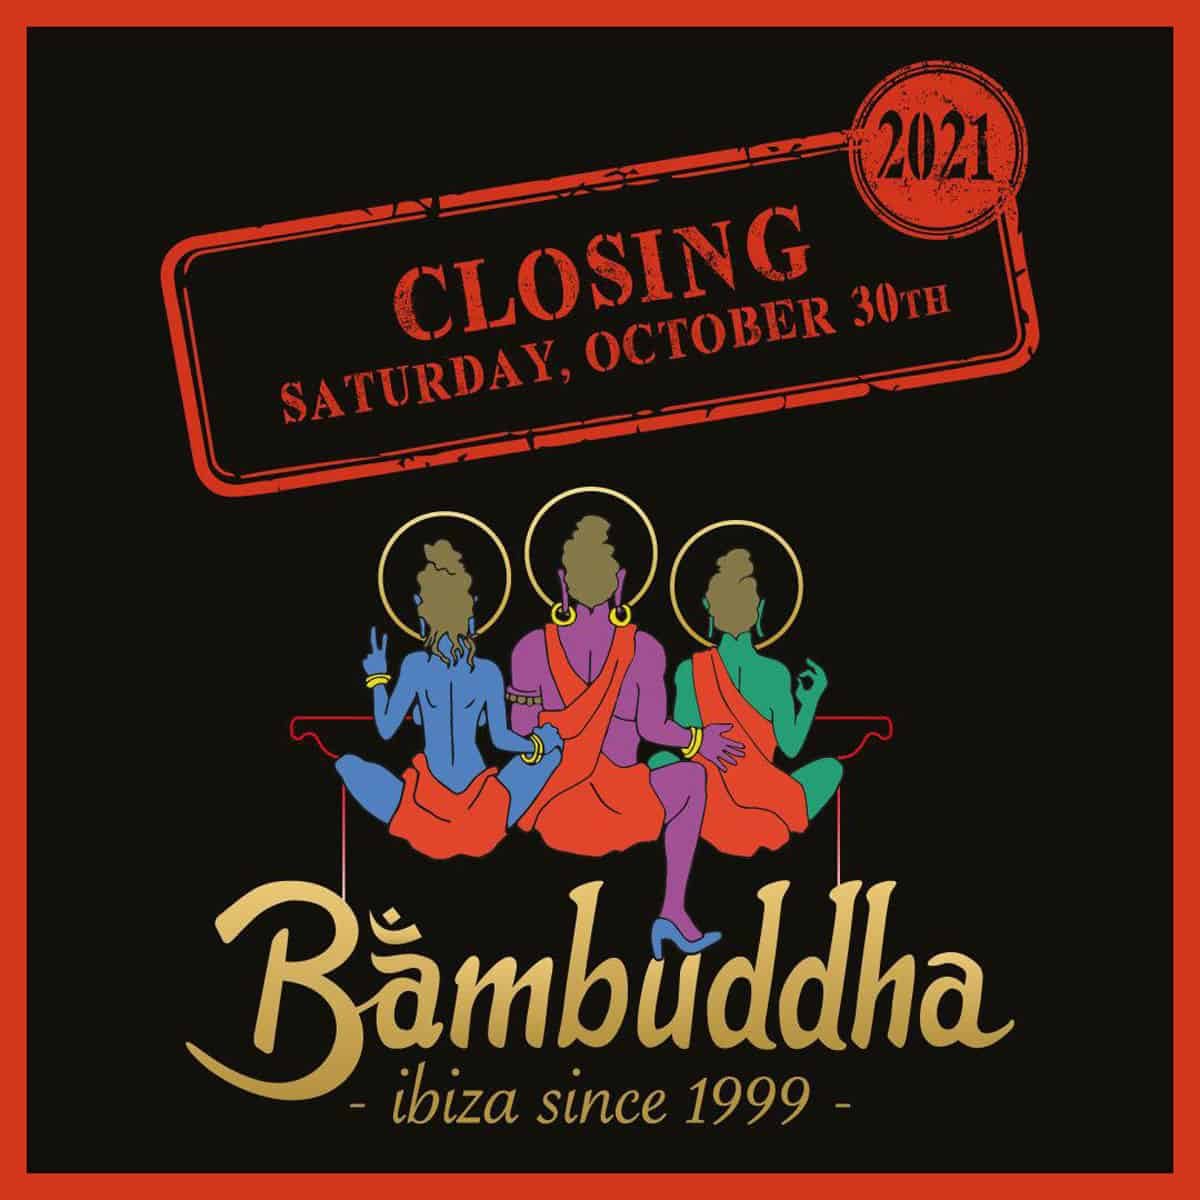 closing-bambuddha-ibiza-2021-welcometoibiza